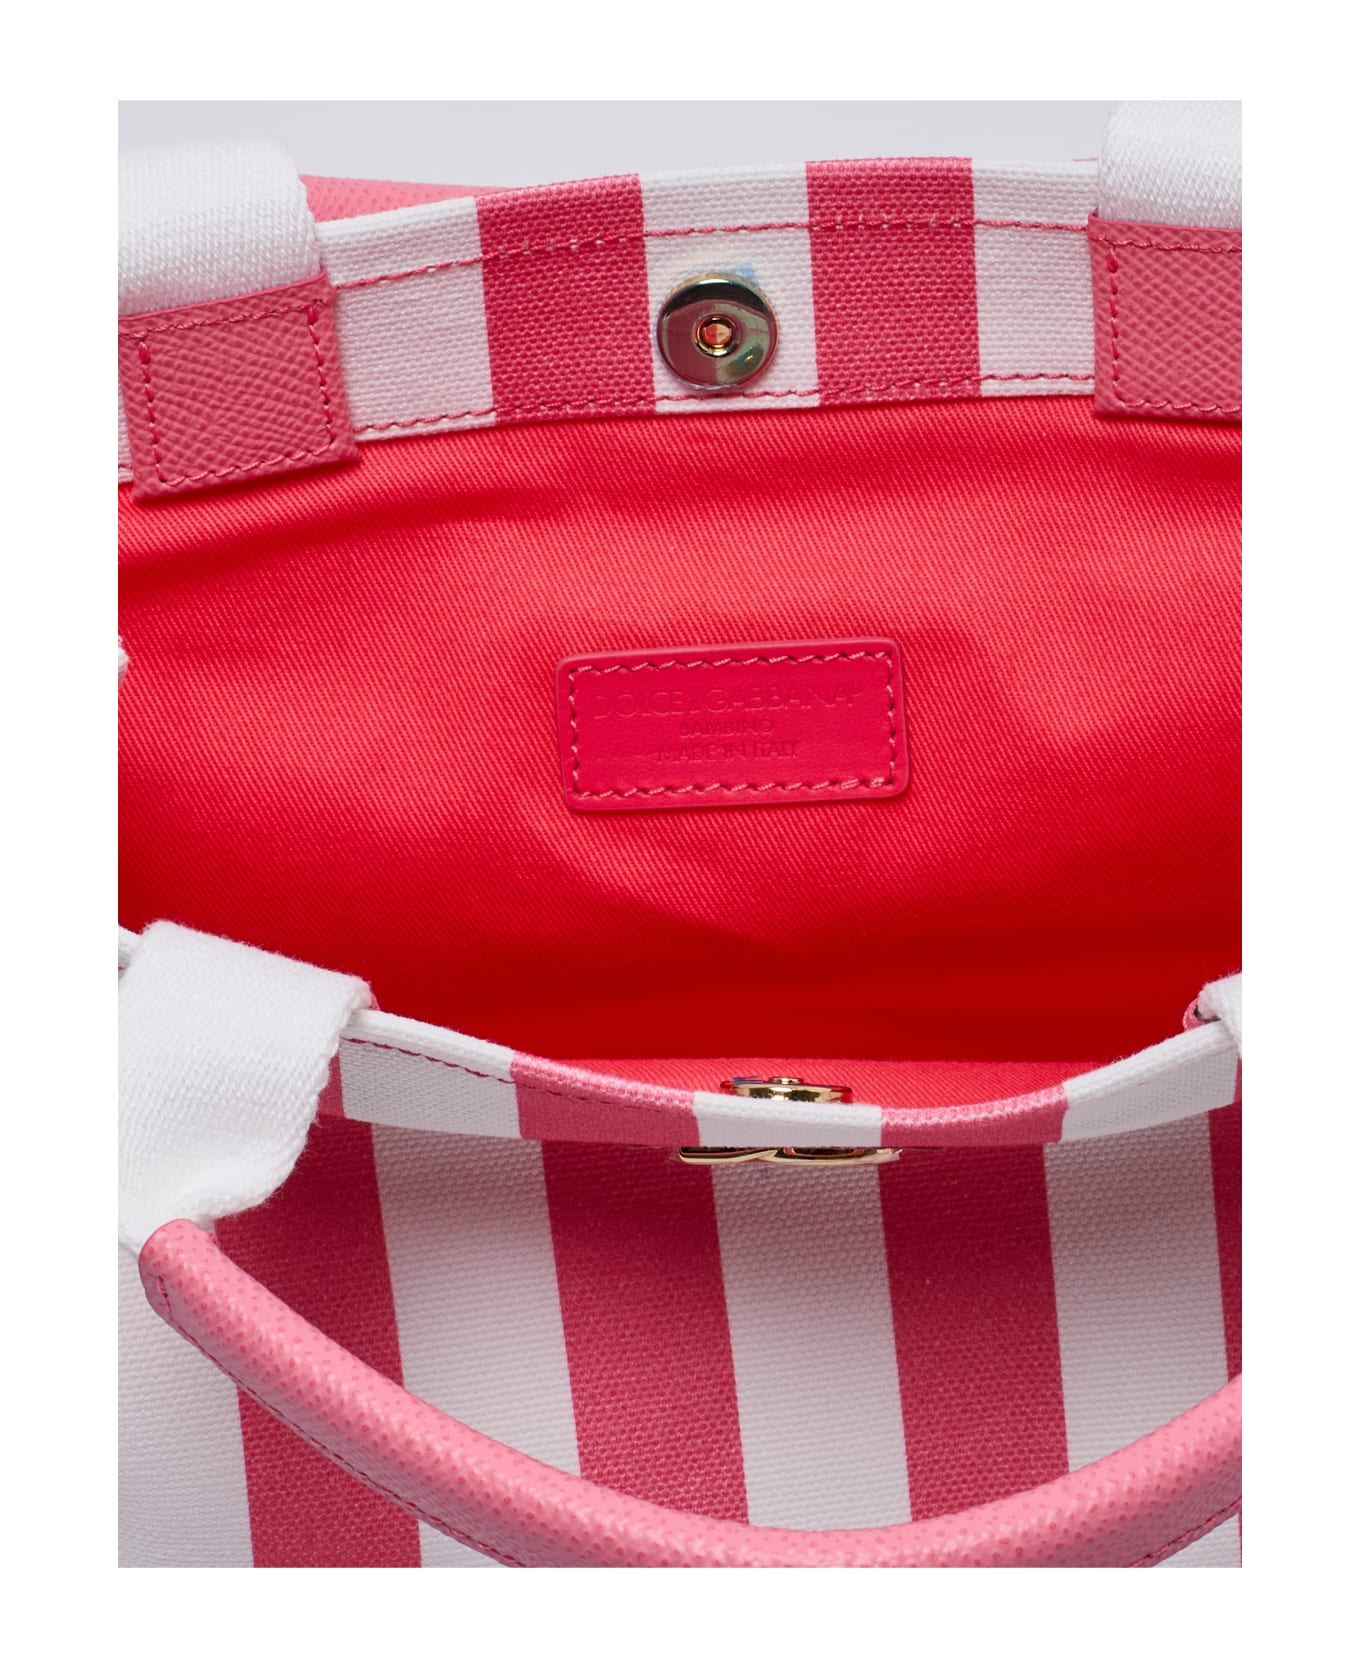 Dolce & Gabbana Handbag Shopping Bag - RIGHE BIANCO-ROSA